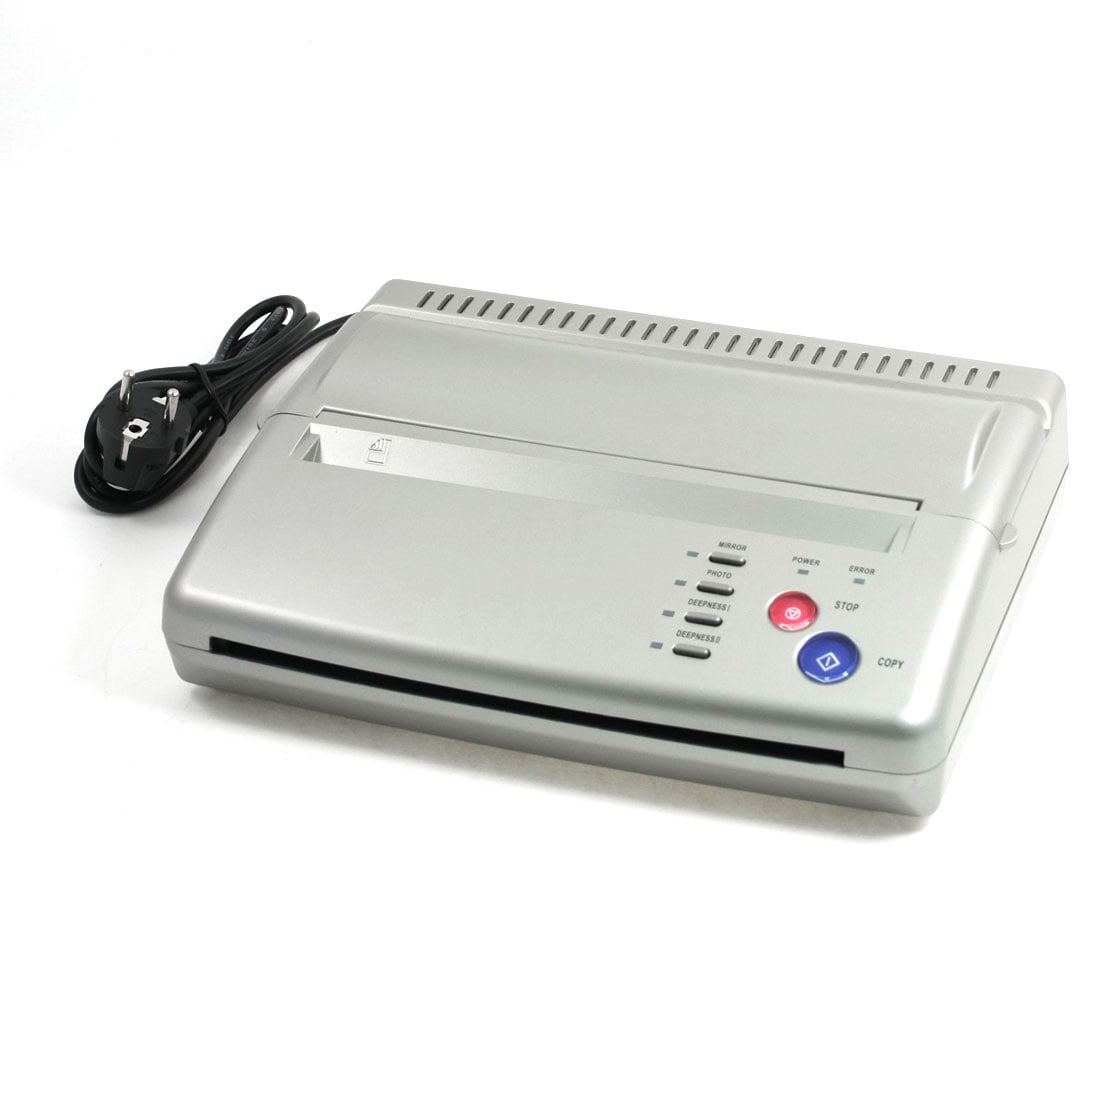 EU Plug 110V-220VAC Tattoo Transfer Machine Flash Printer Hectograph w Cord